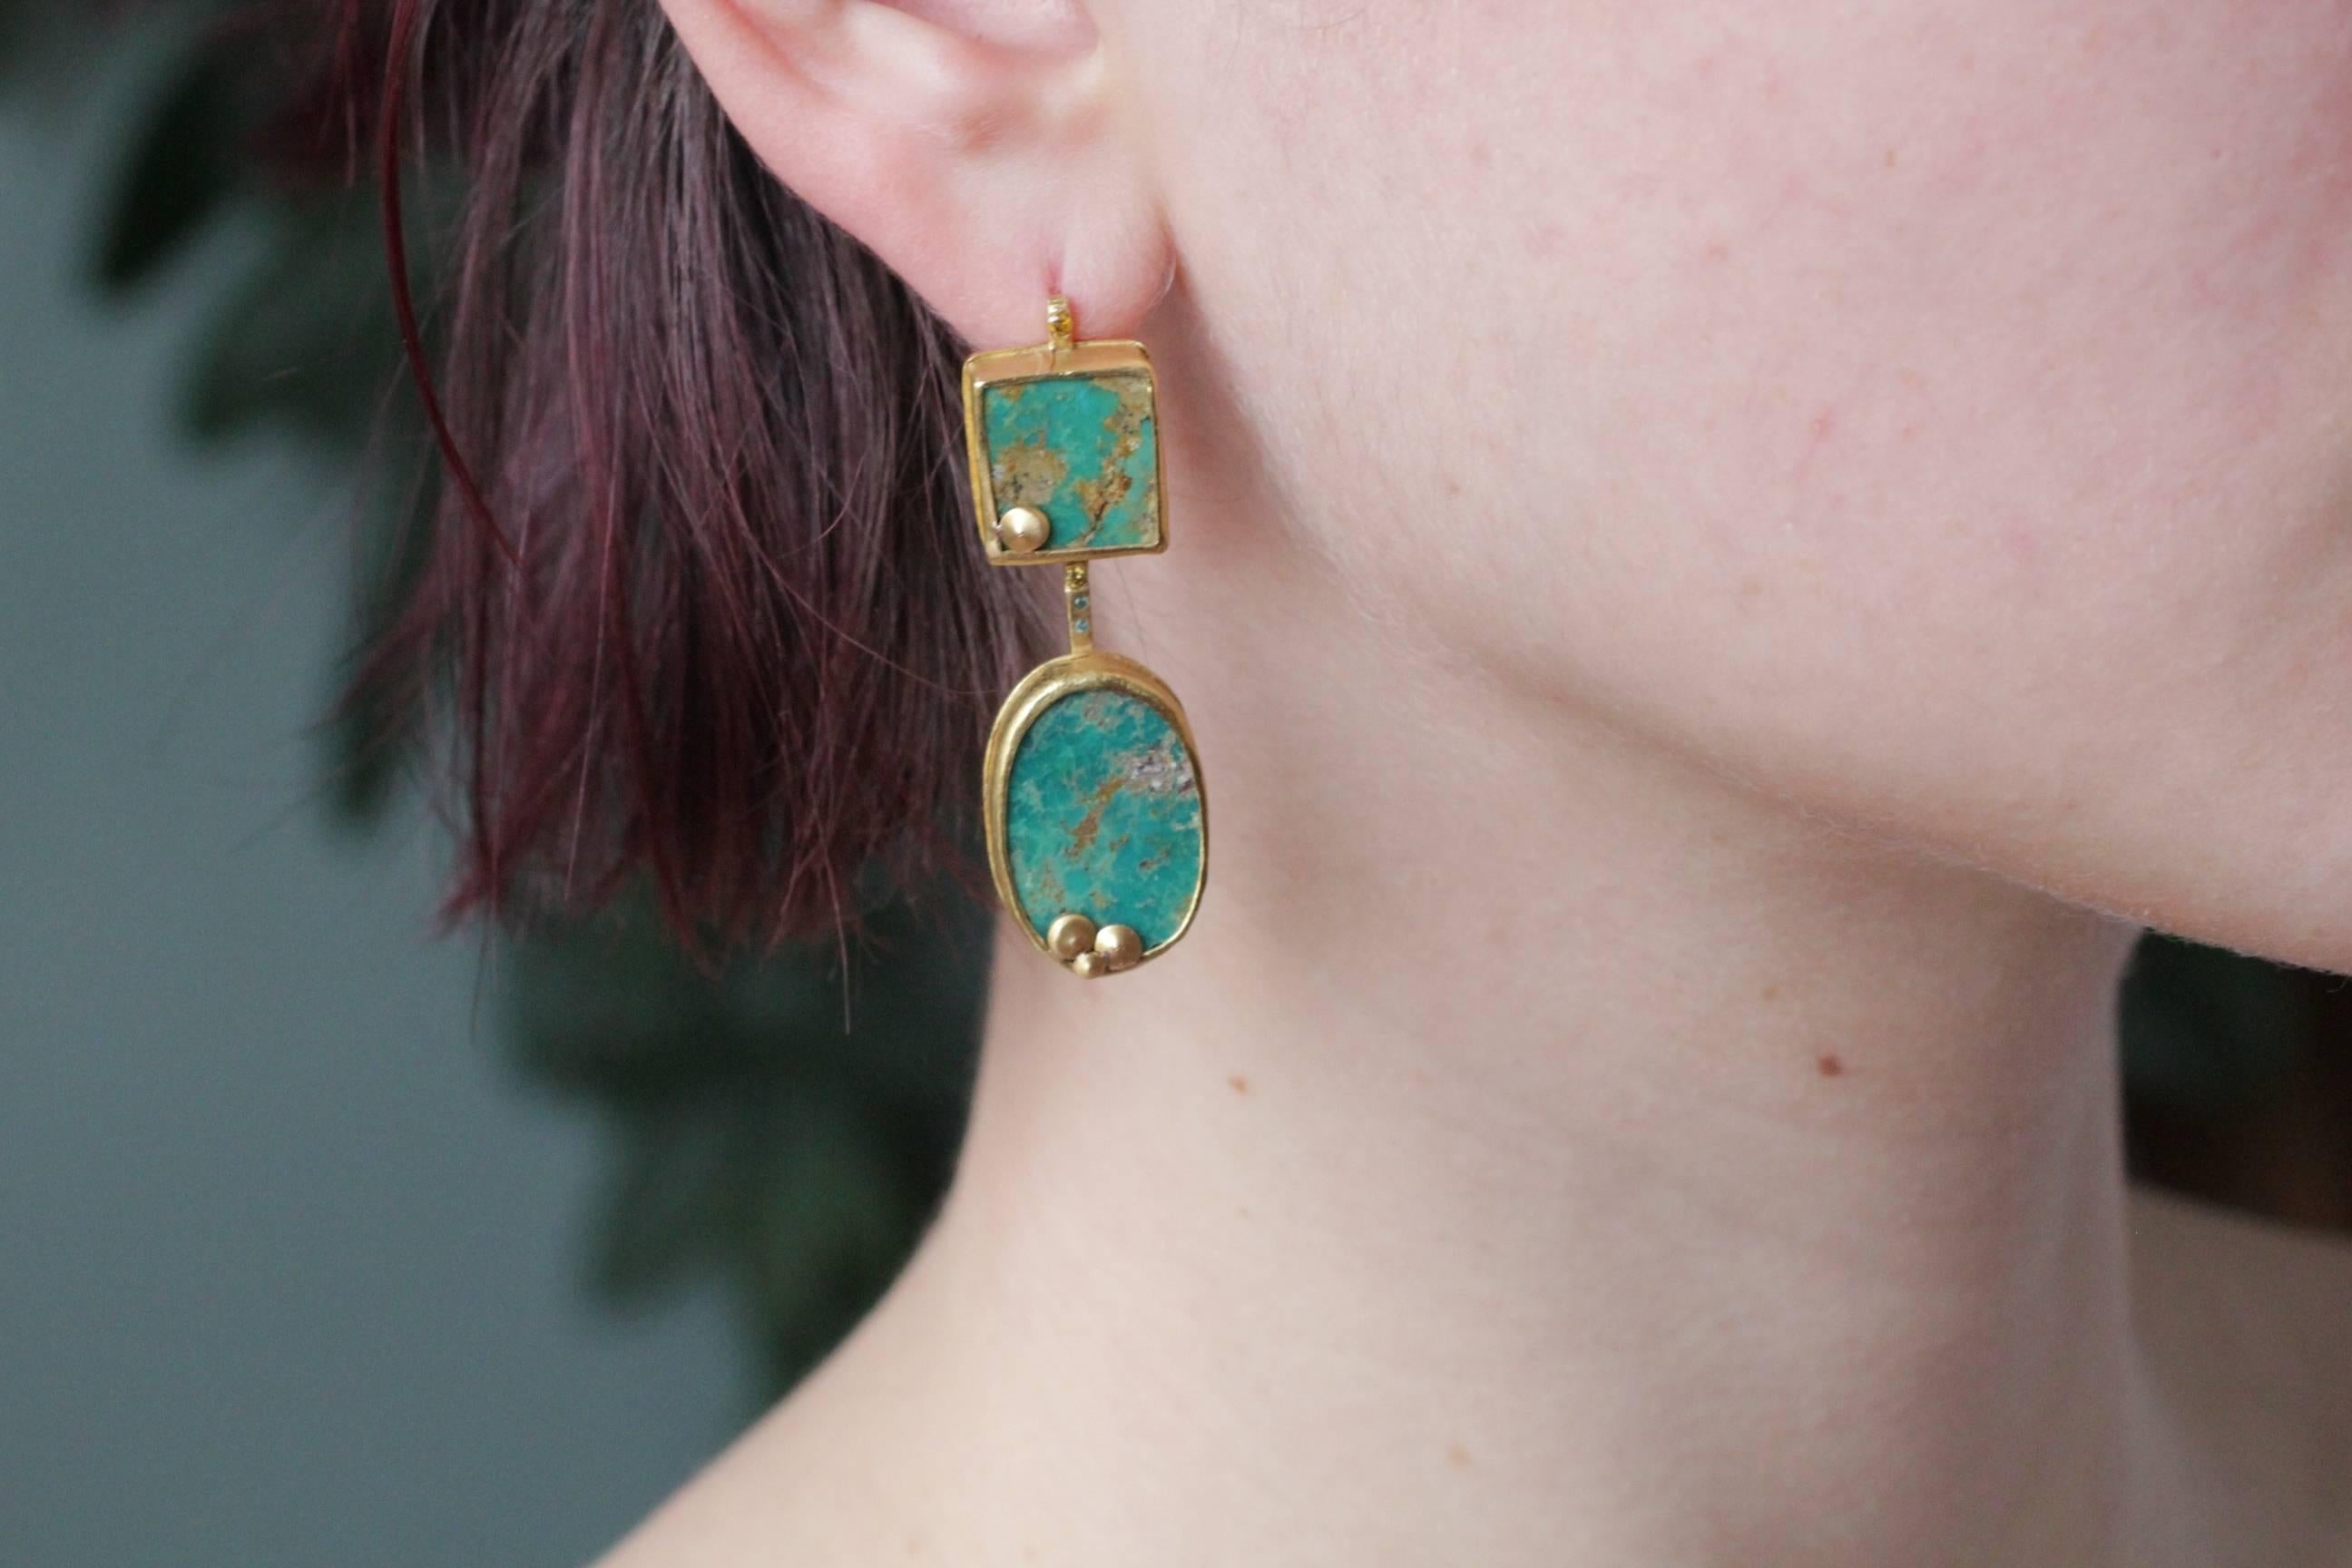 22Karat-21Karat Gold Persian Turquoise and Diamond Earrings Handmade Jewelry 10